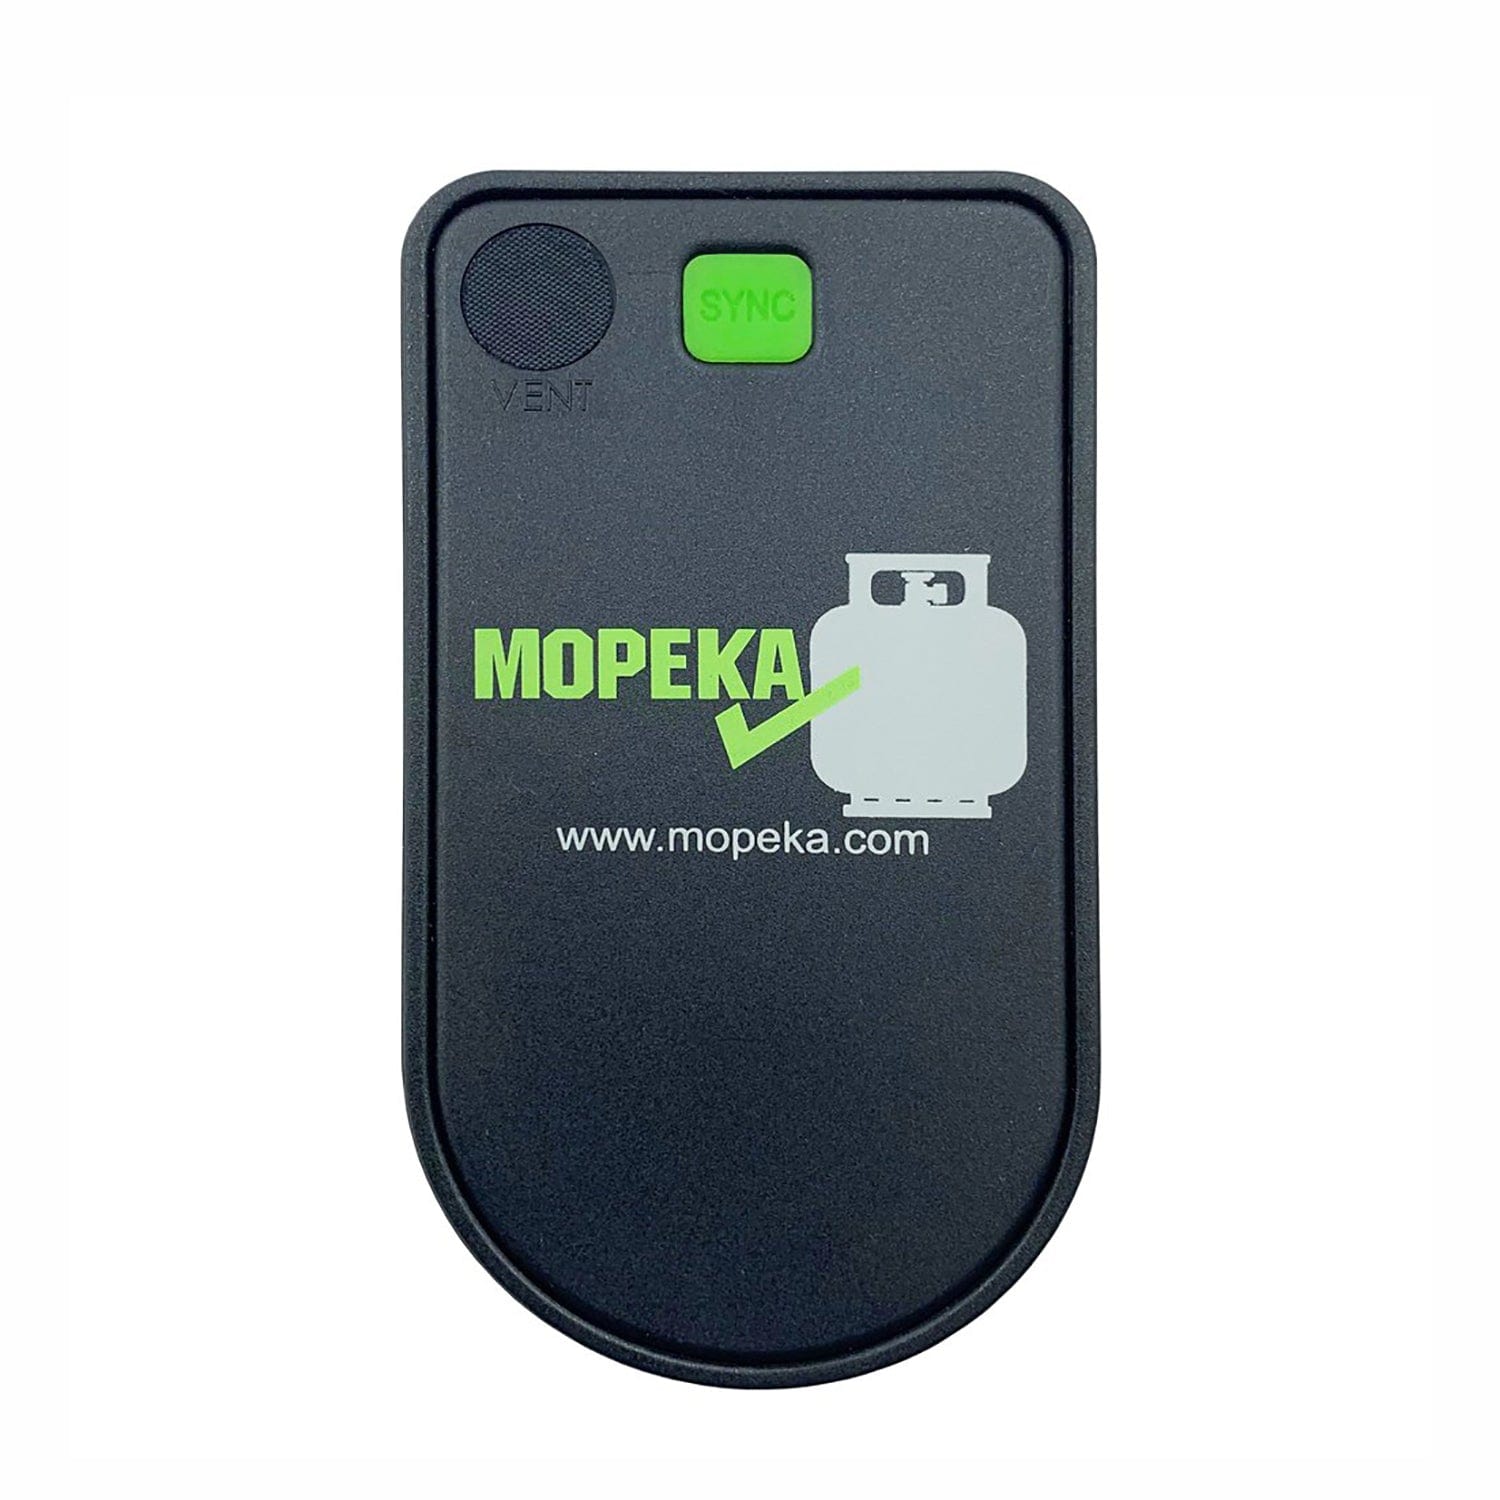 Mopeka 024-1001 AP Products LP Tank Check Single Sensor